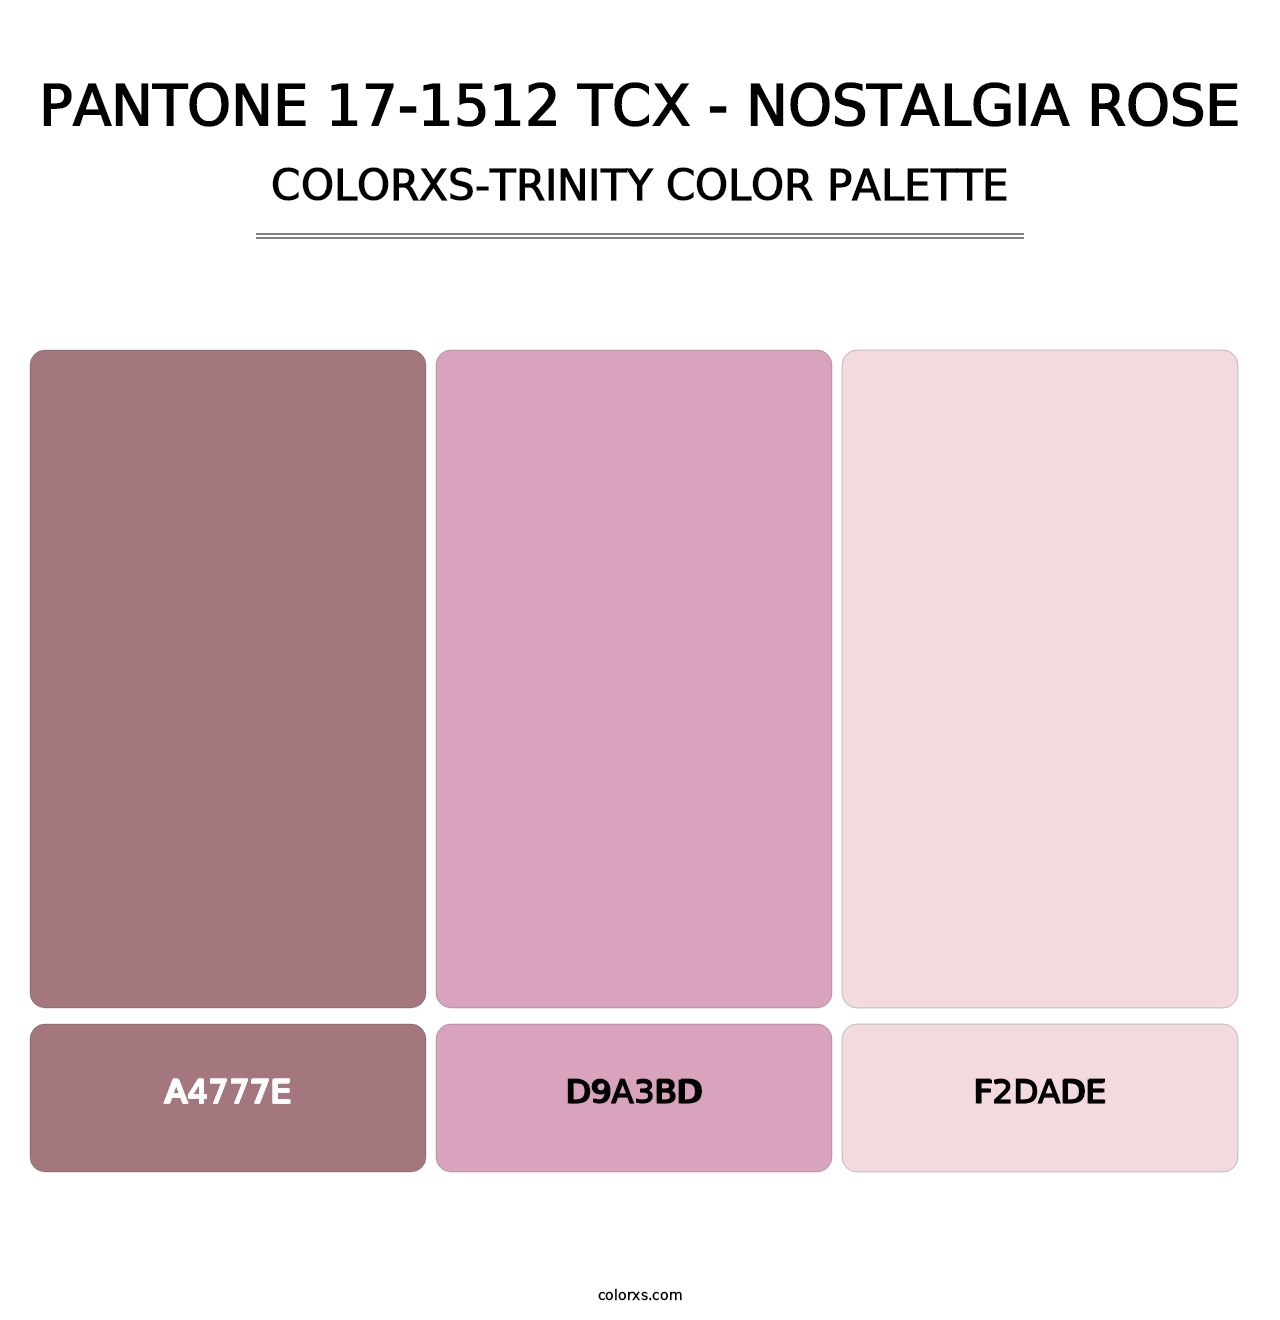 PANTONE 17-1512 TCX - Nostalgia Rose - Colorxs Trinity Palette